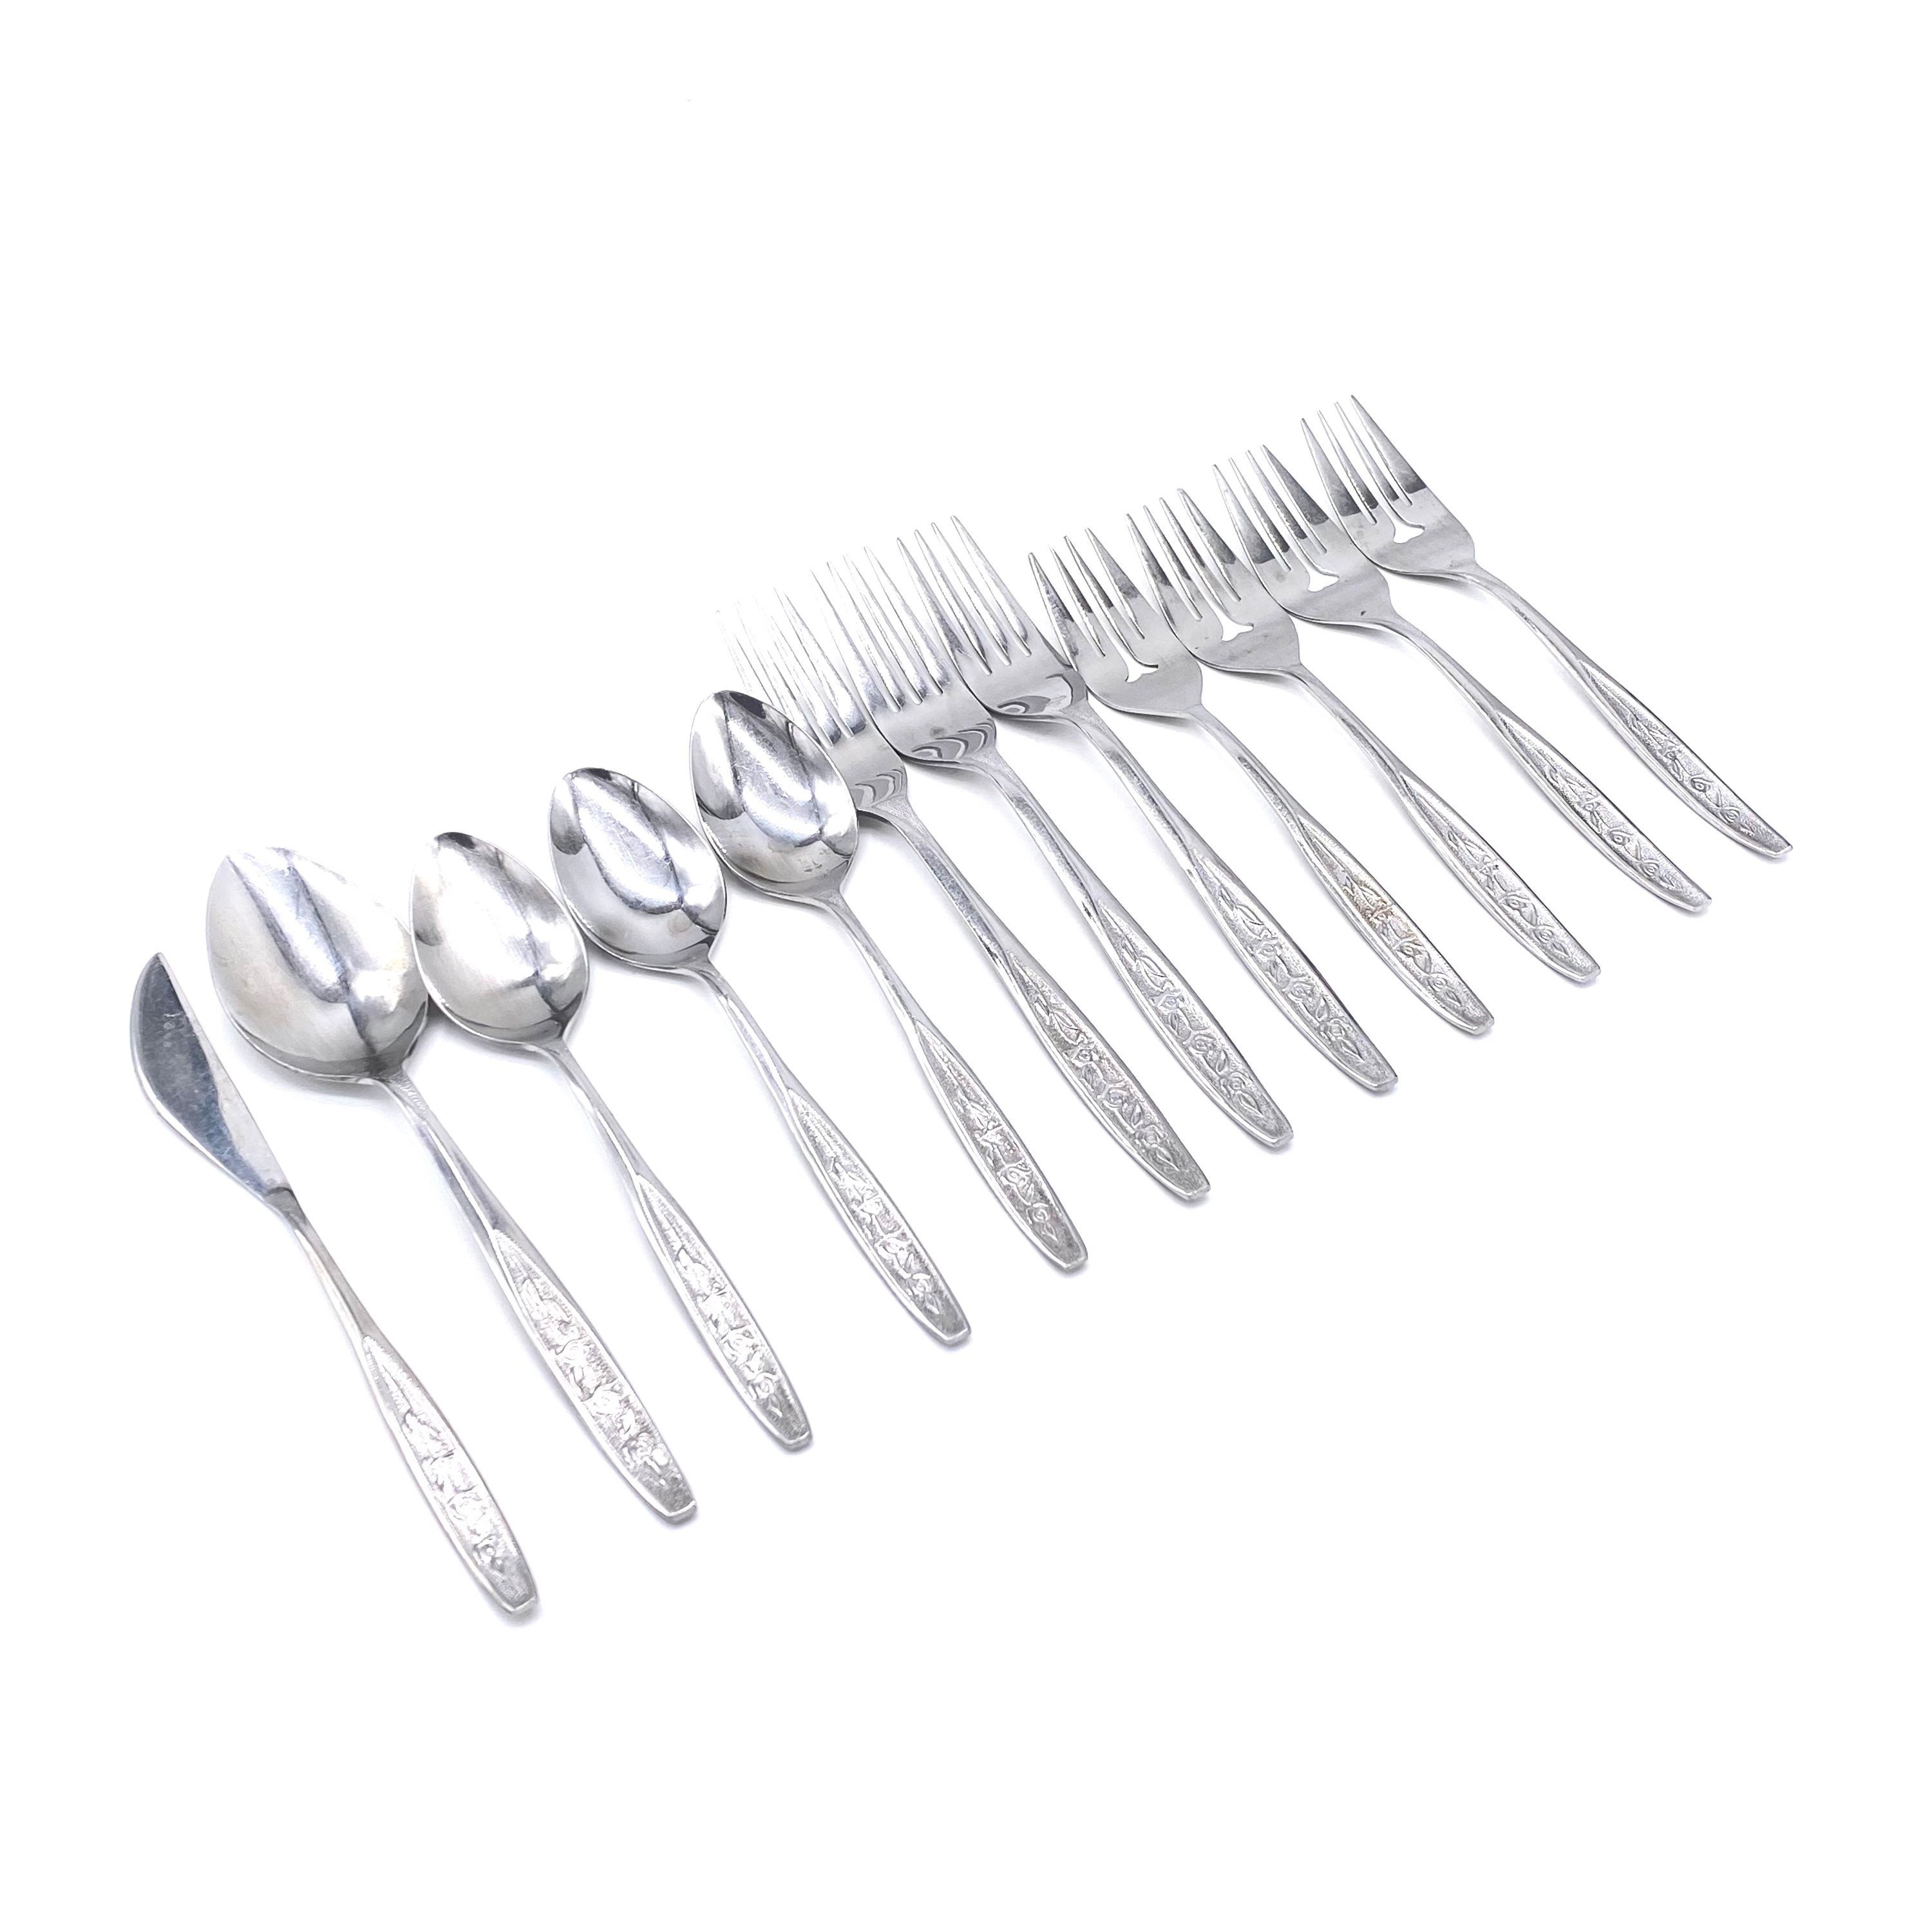 Basics Stainless Steel Dinner Forks with Scalloped Edge Pack of 12 